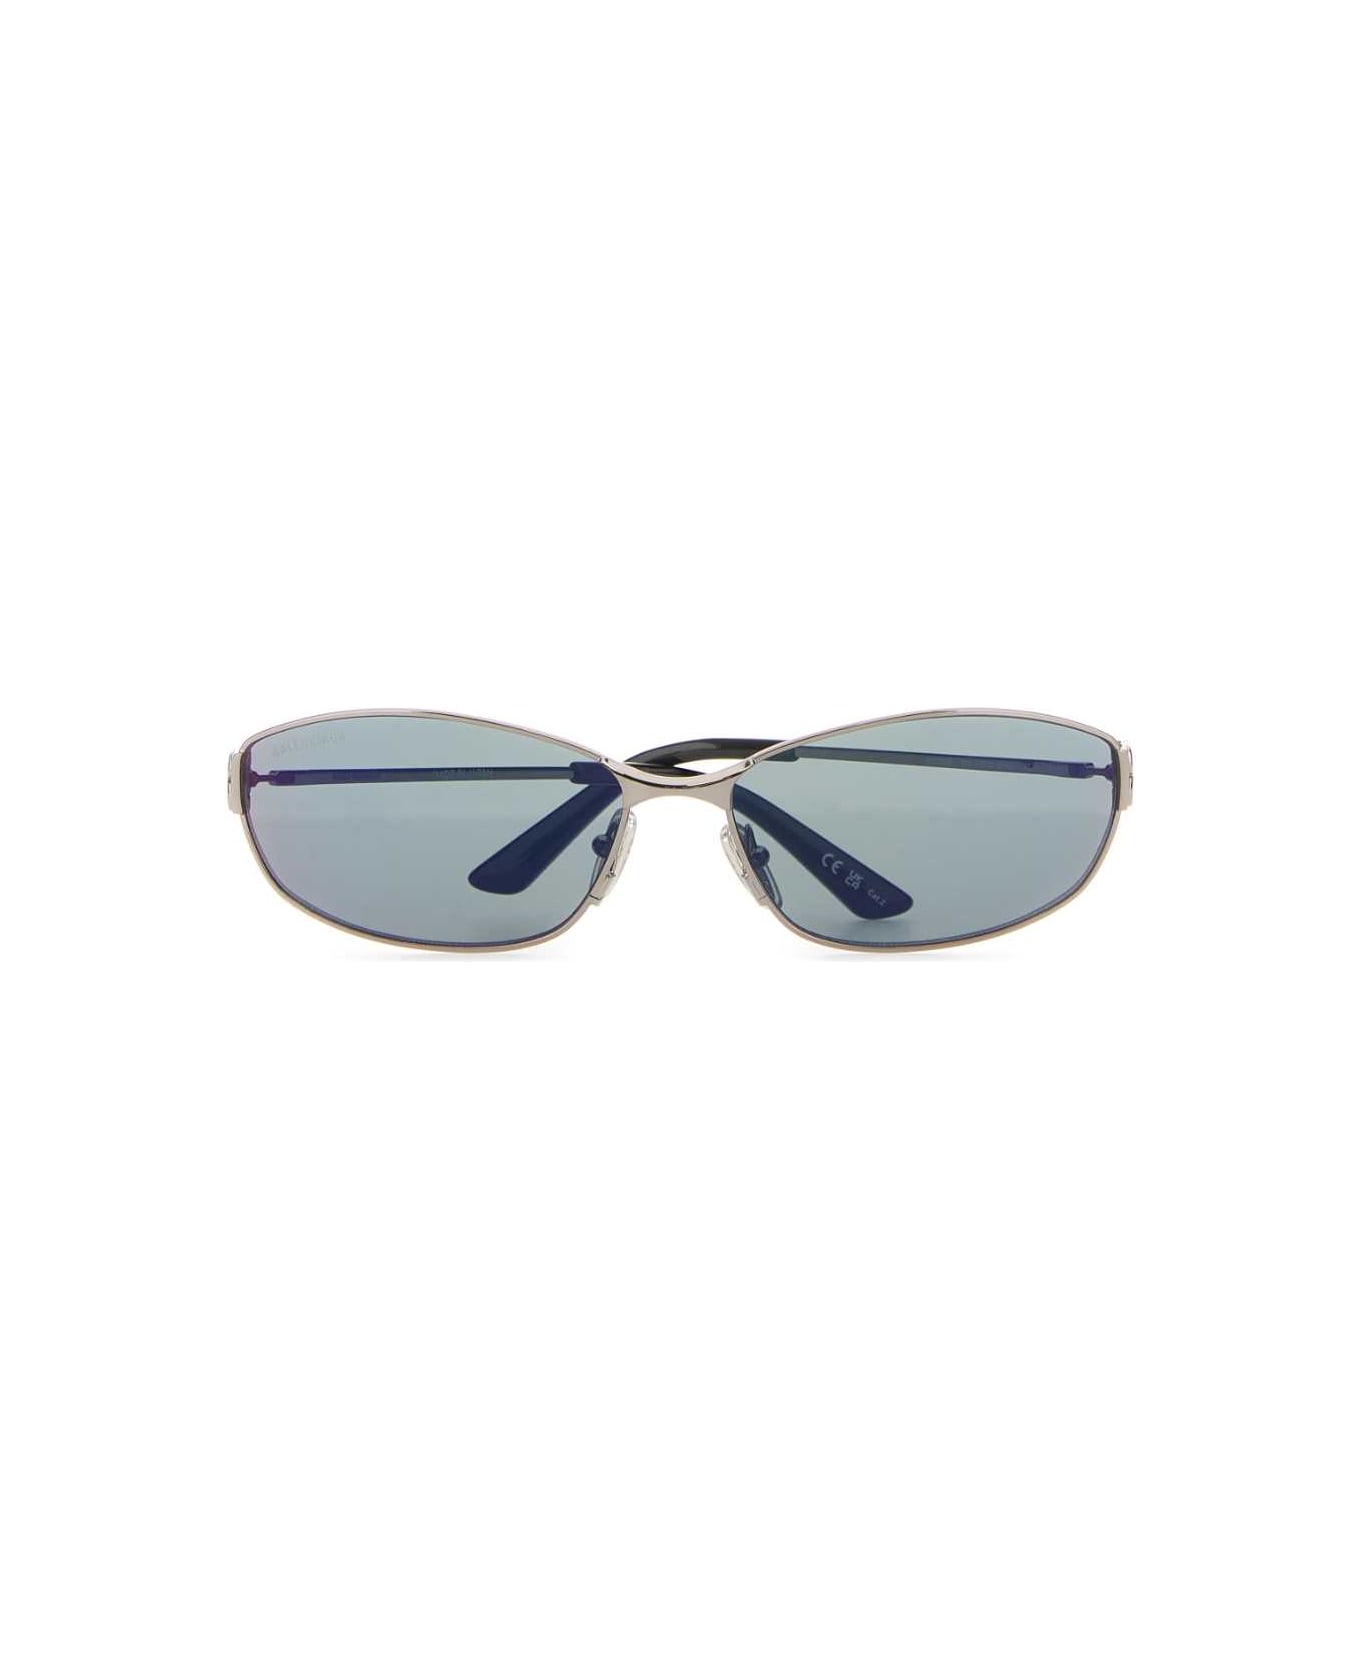 Balenciaga Silver Metal Mercury Oval Sunglasses - MIRRORINFRARED